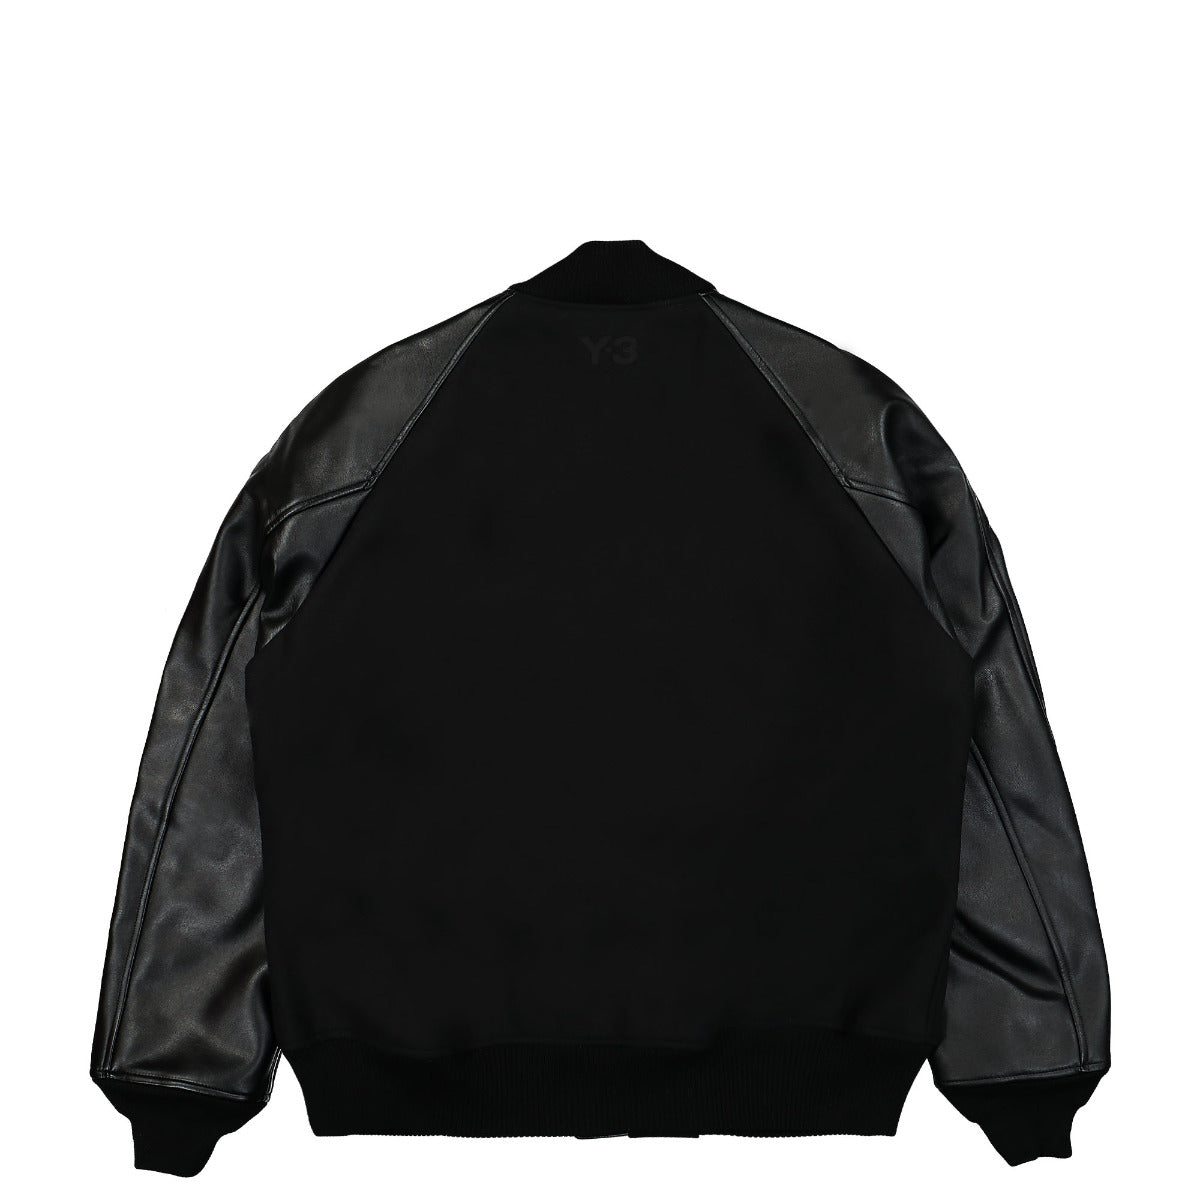 Y-3 Classic Varsity Jacket Black